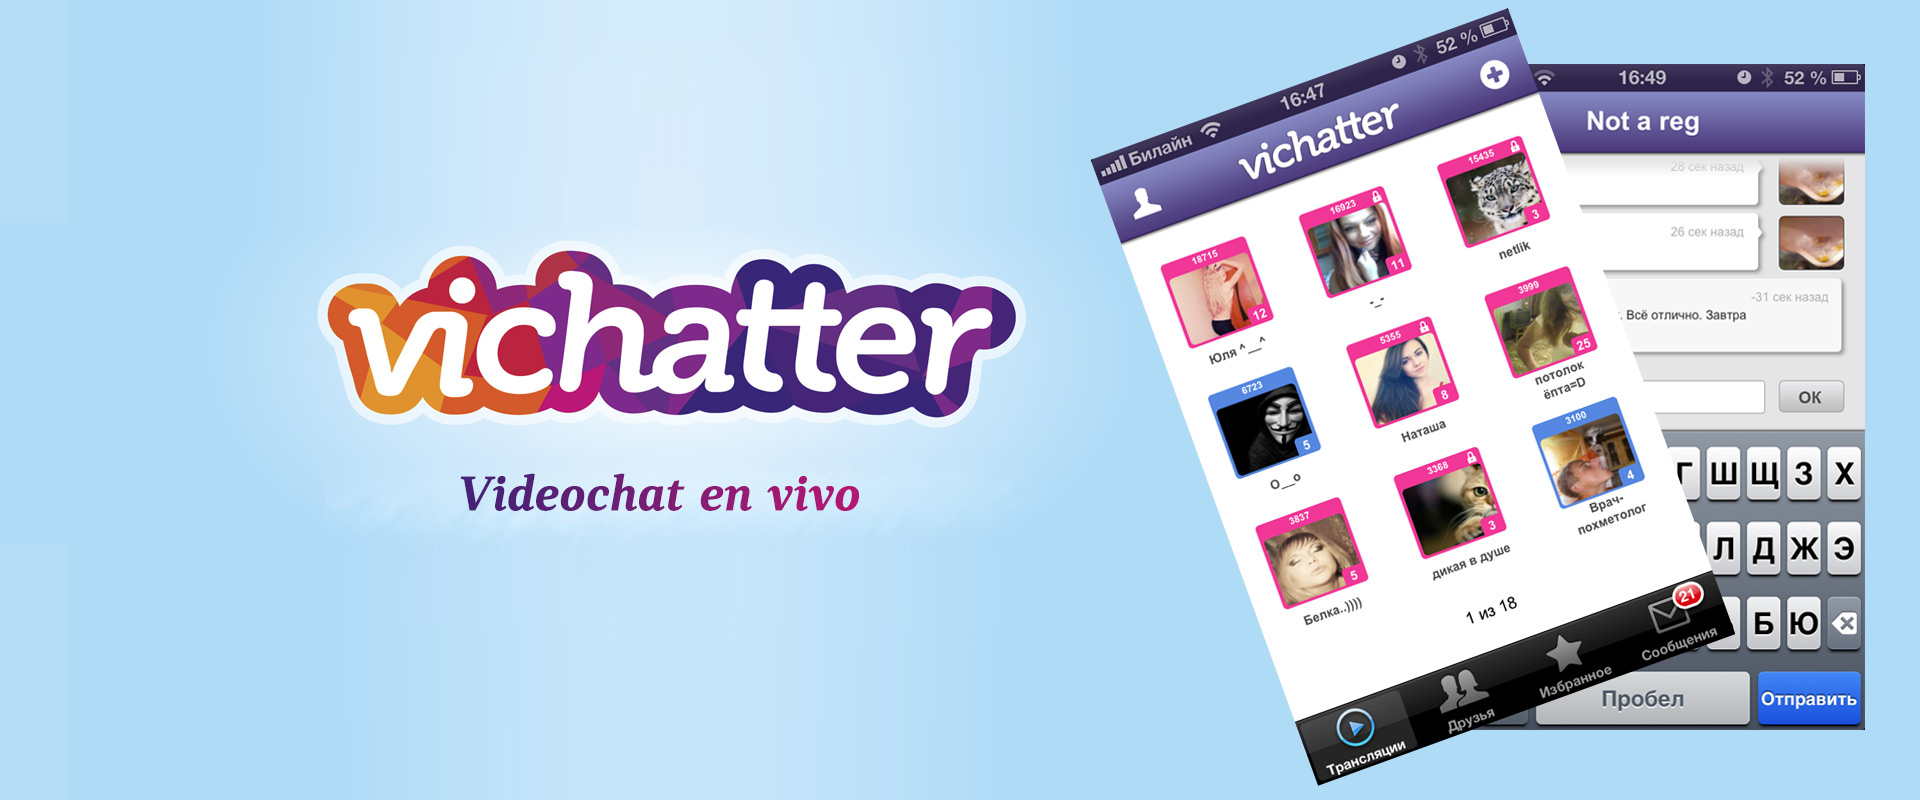 slide_app_vichatter_es